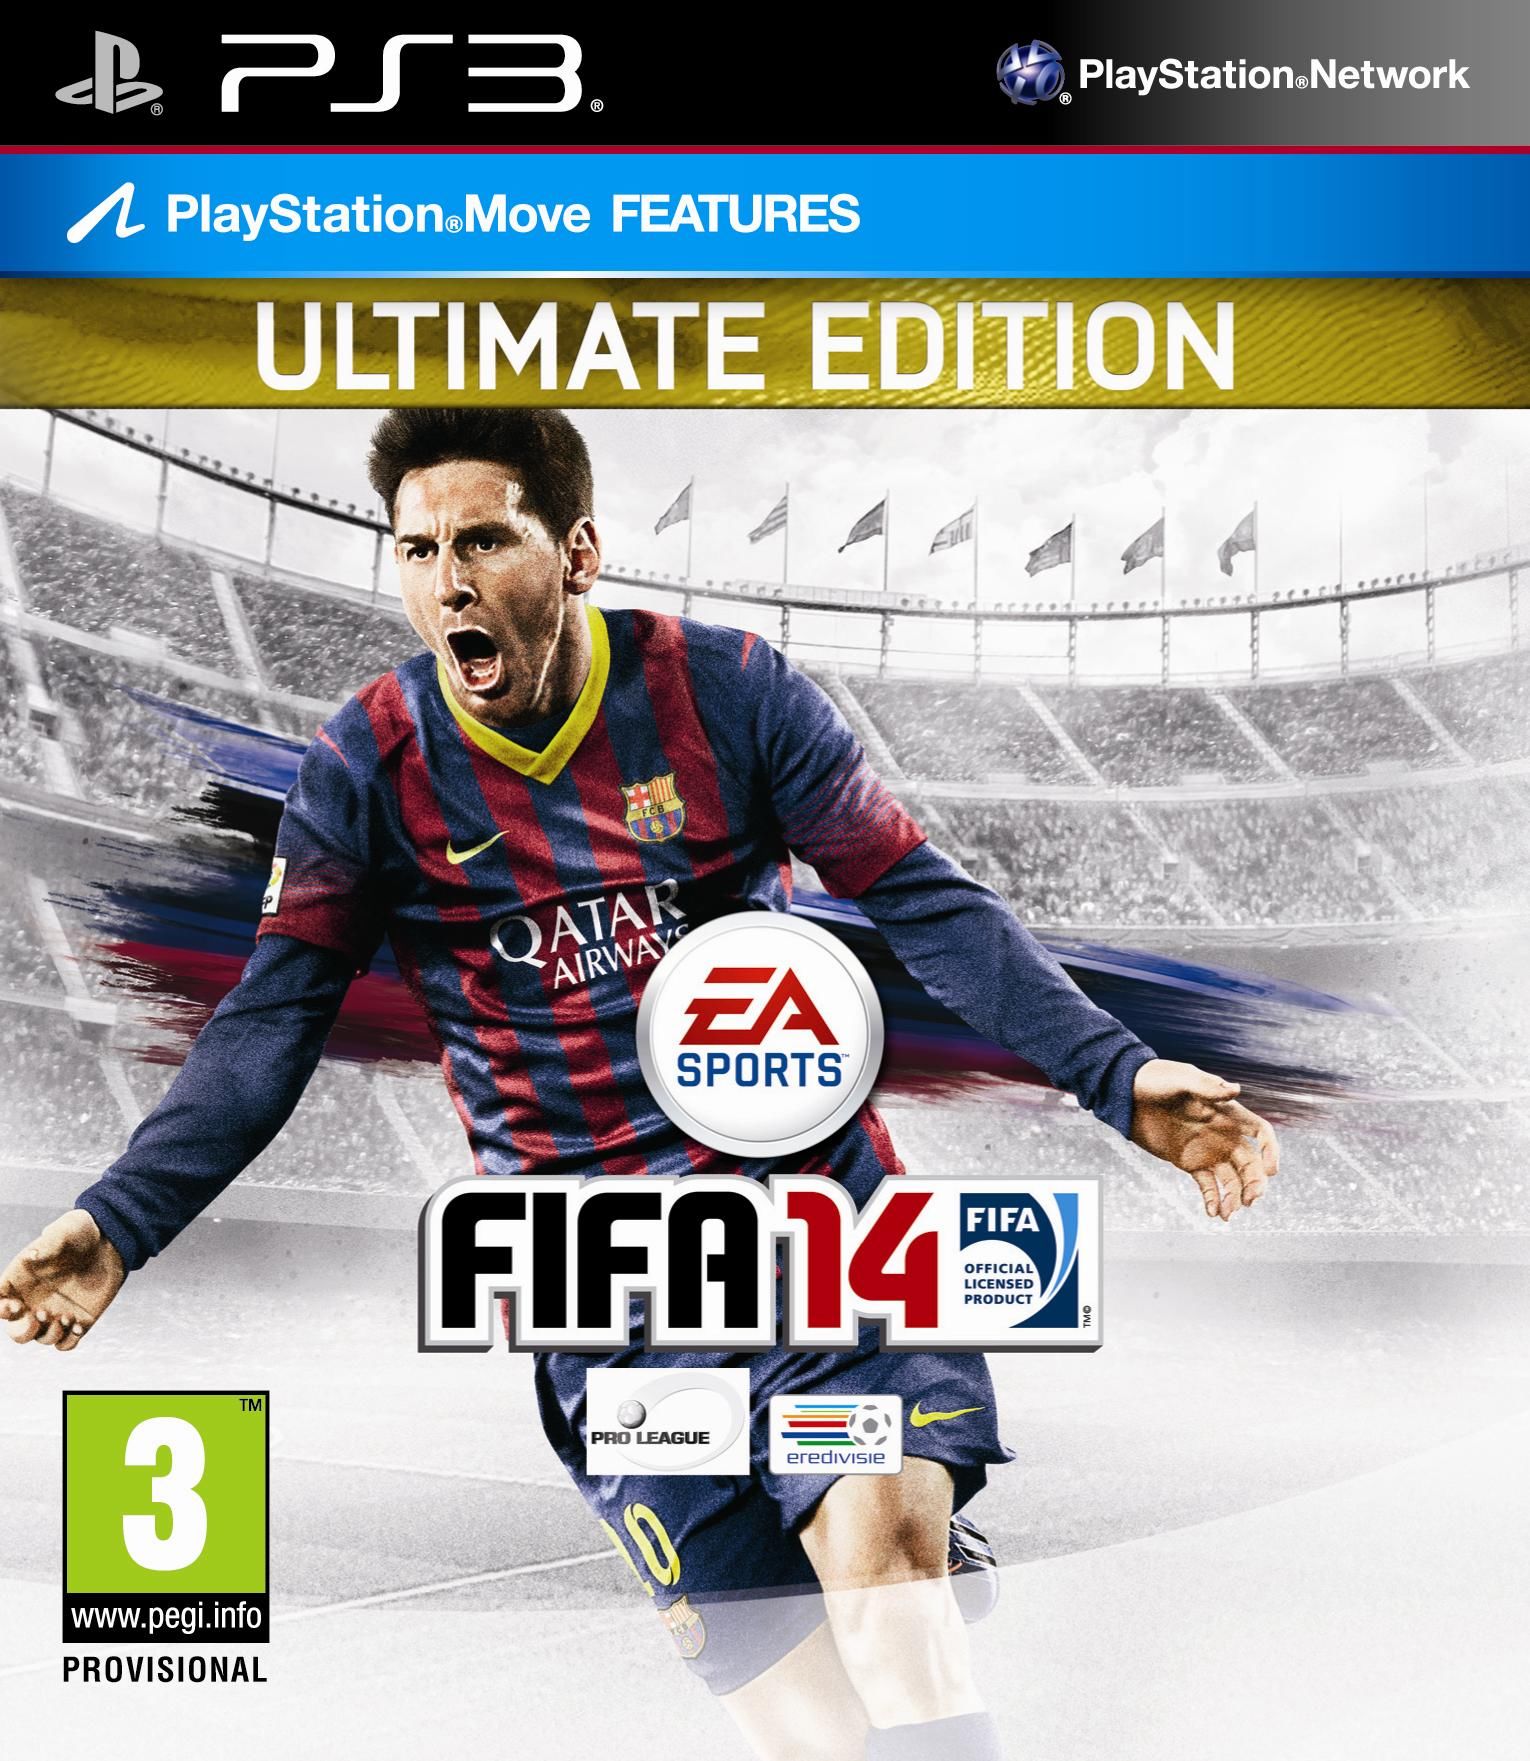 Fifa 14 Ultimate Edition